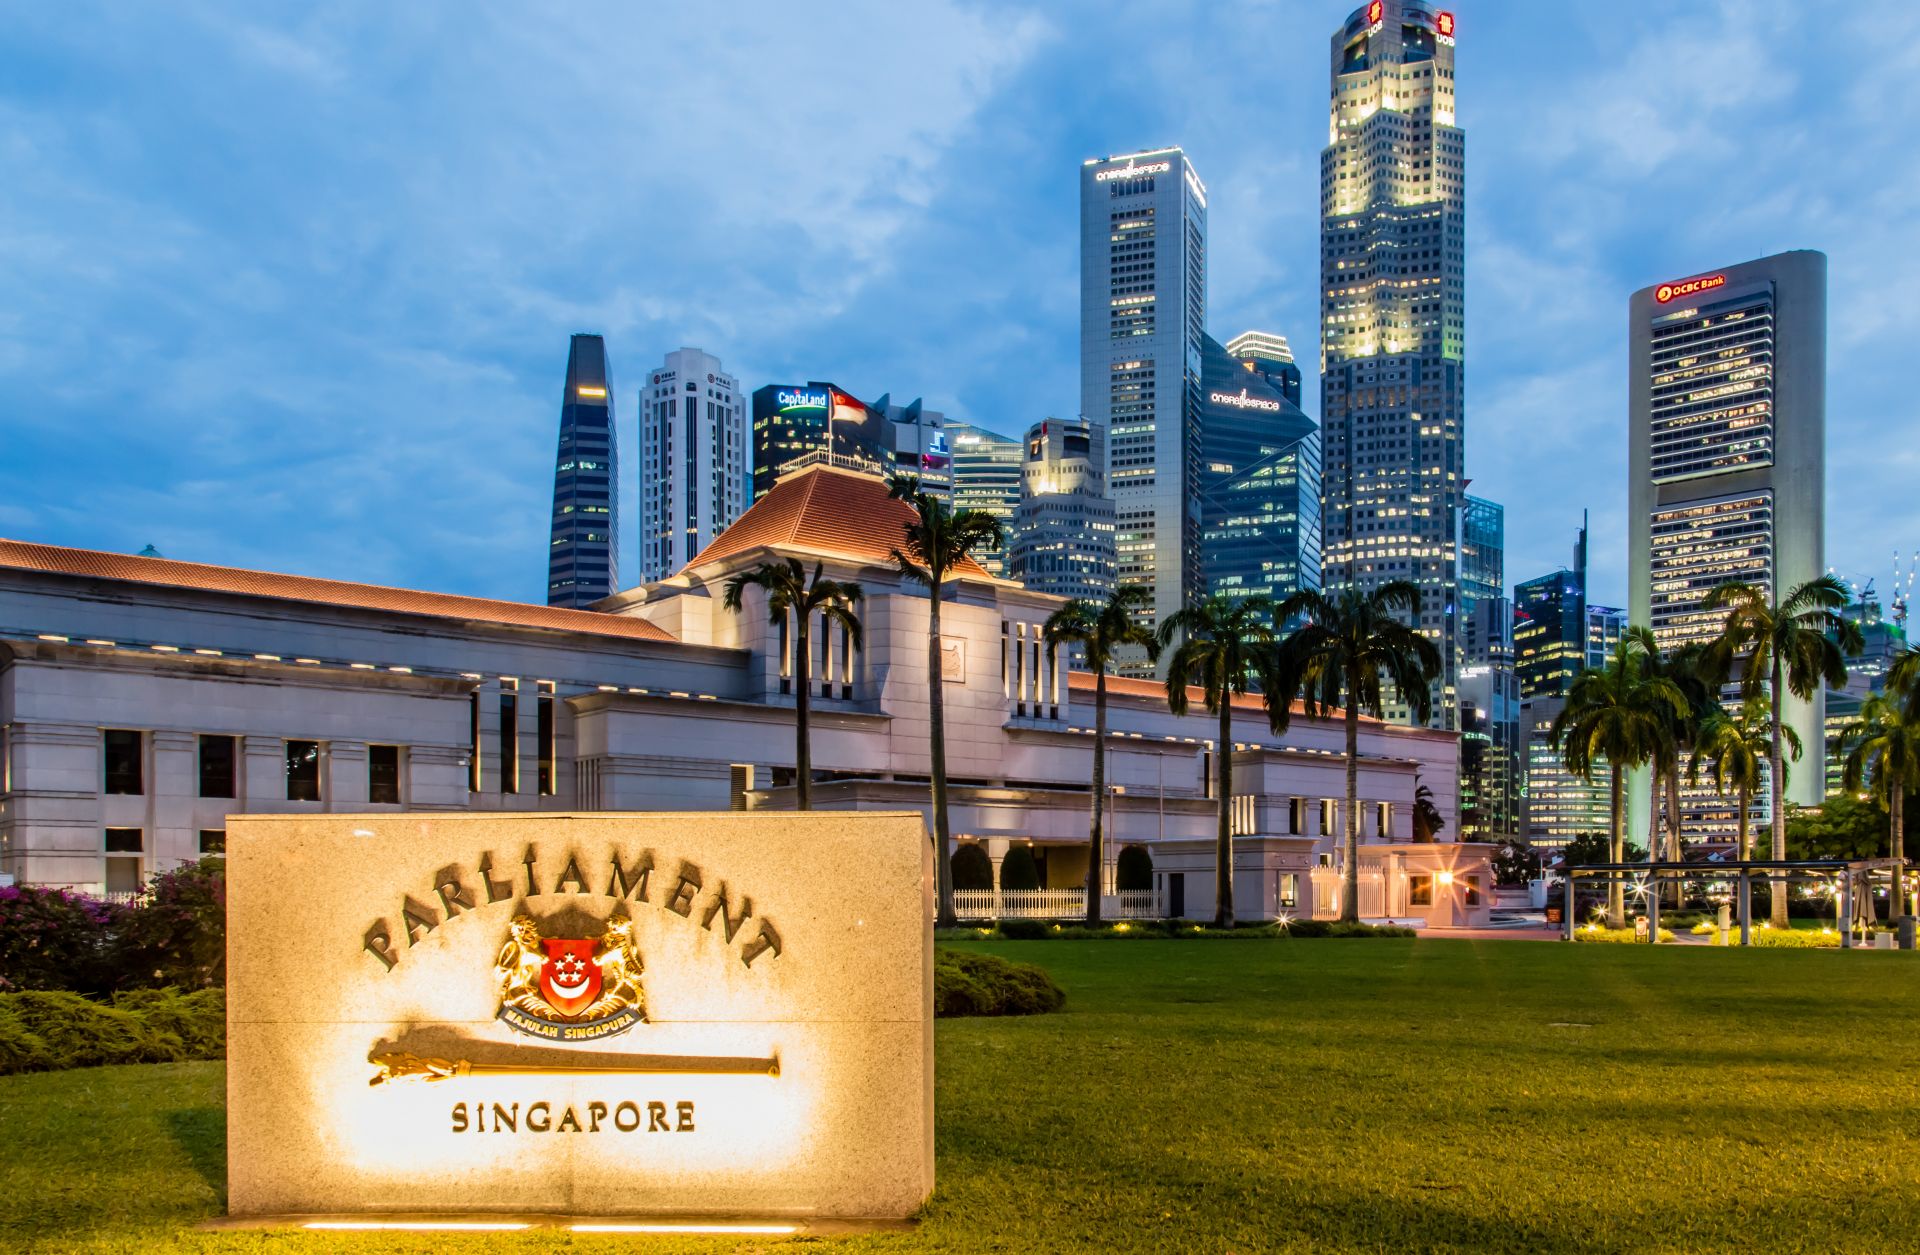 A photo of Singapore's Parliament building against a cityscape.